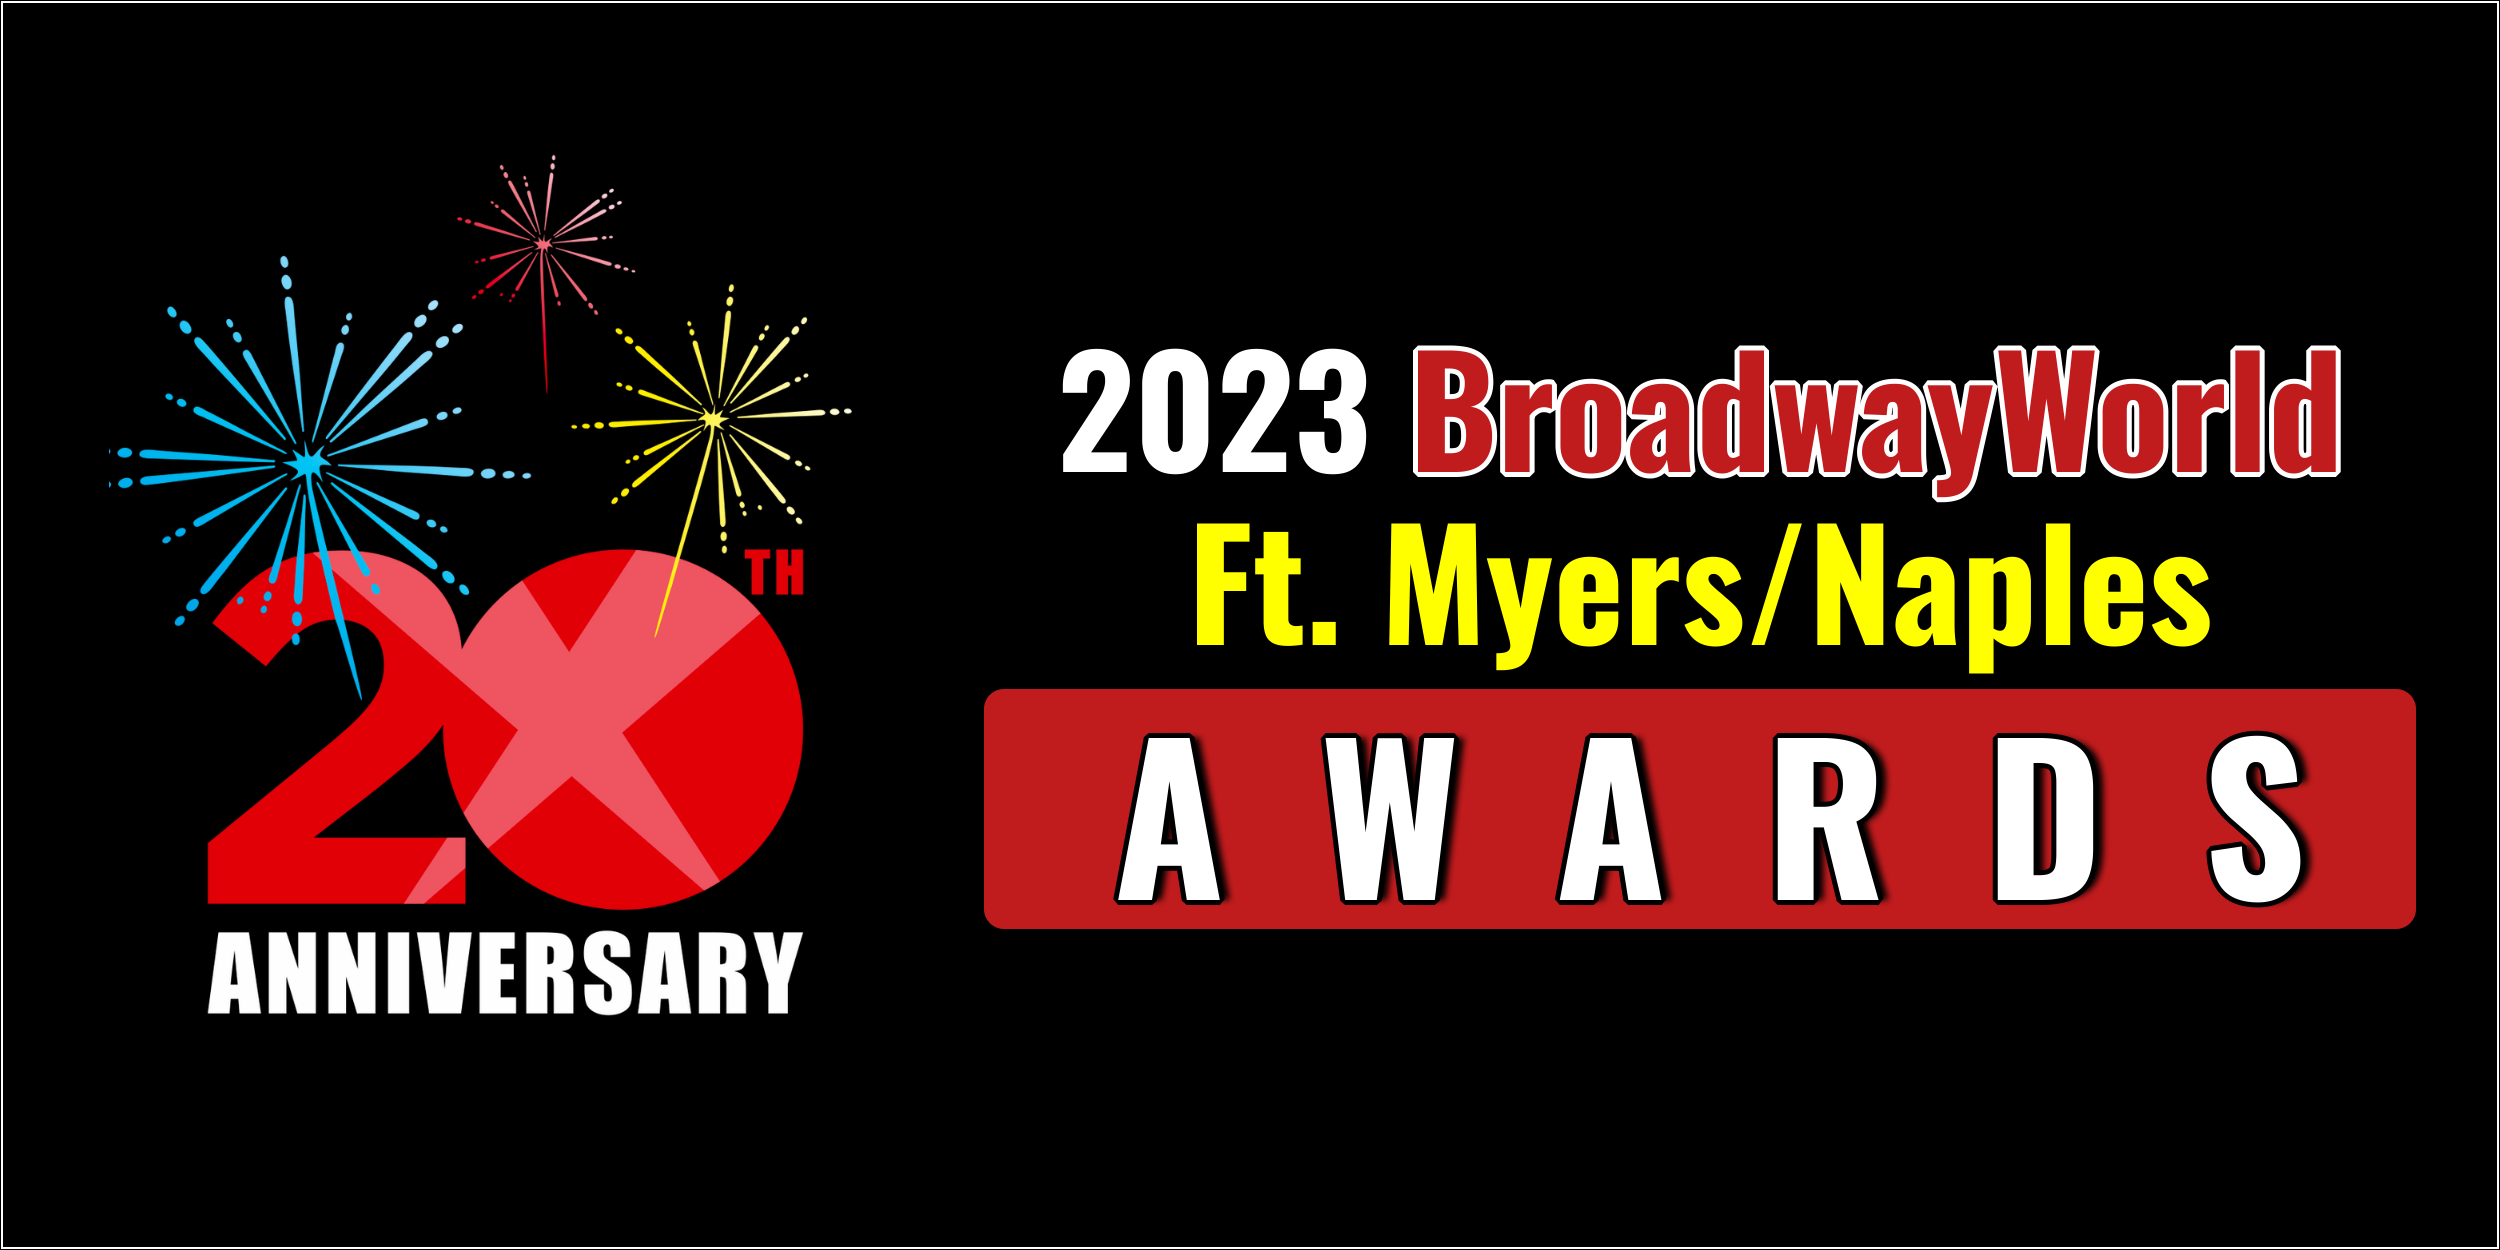 Latest Standings Announced For The 2023 BroadwayWorld Ft. Myers/Naples Awards; BULLETPROOF Photo